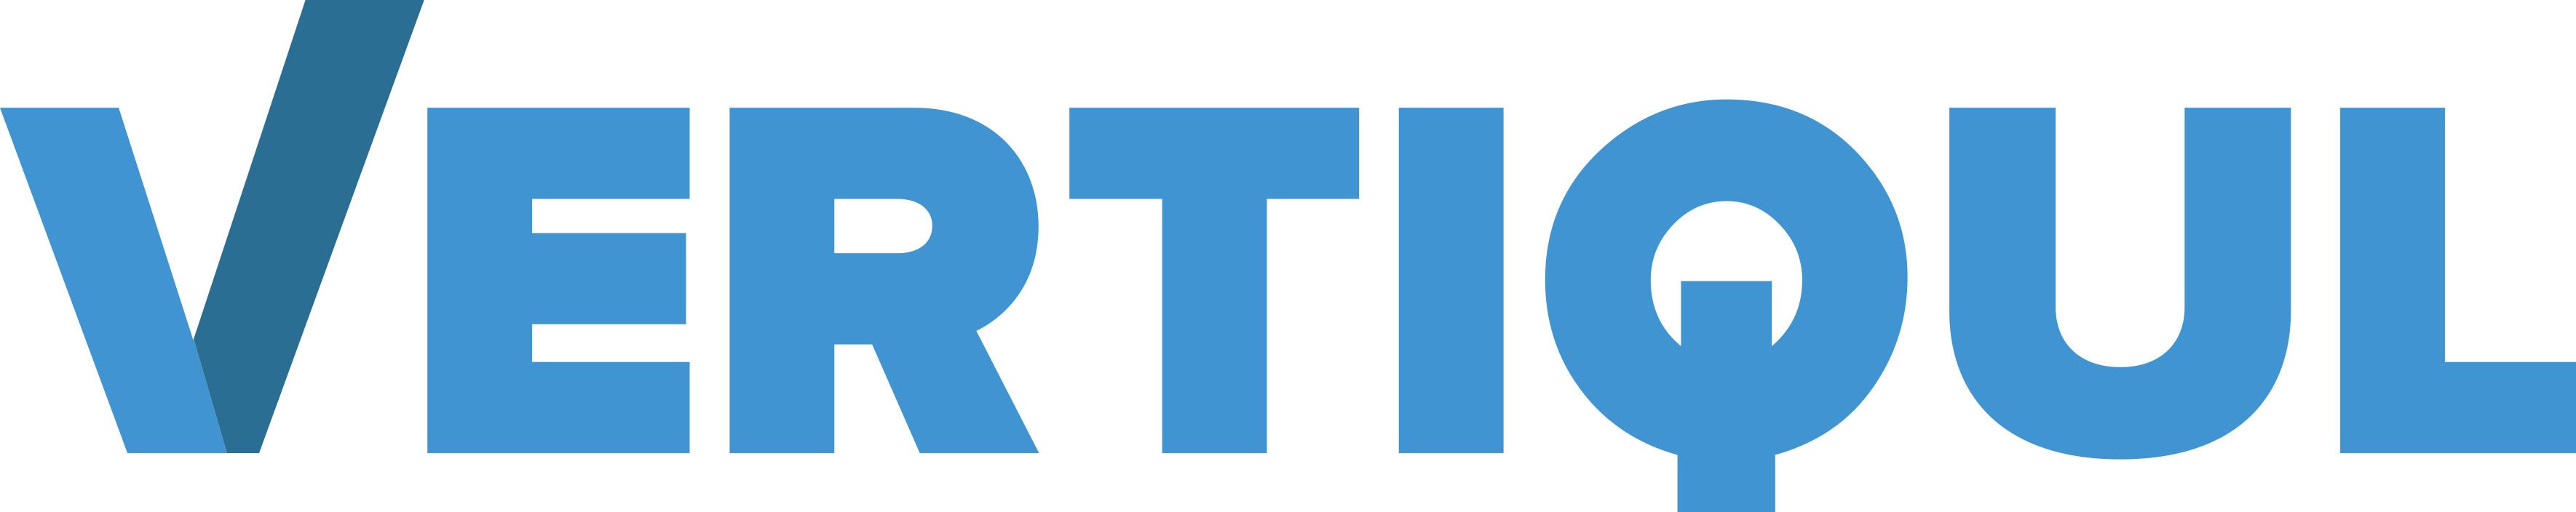 Vertiqul logo